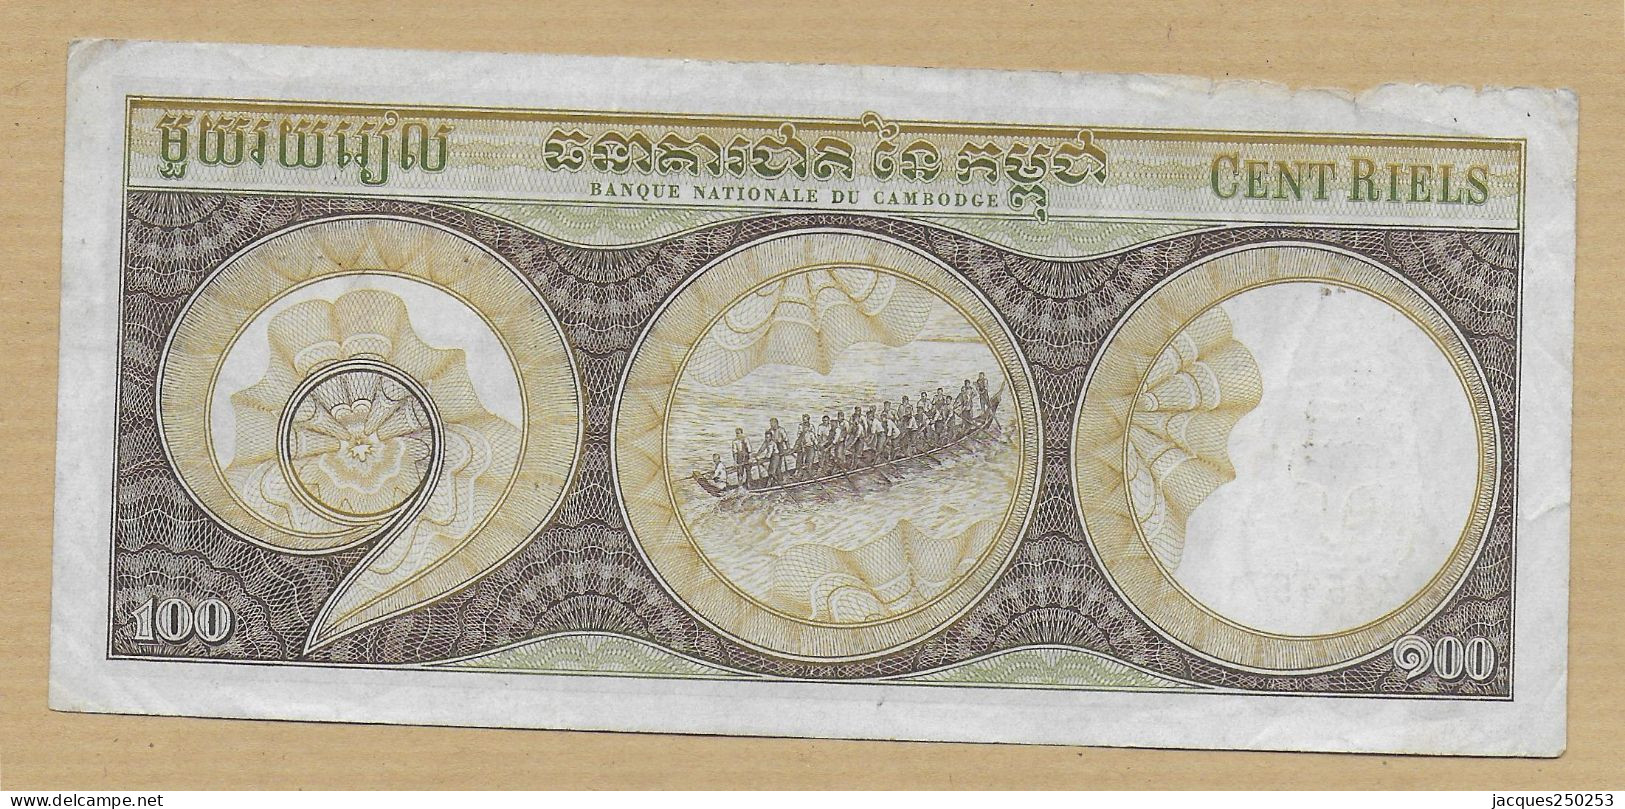 100 Riels Cambodge - Cambodja